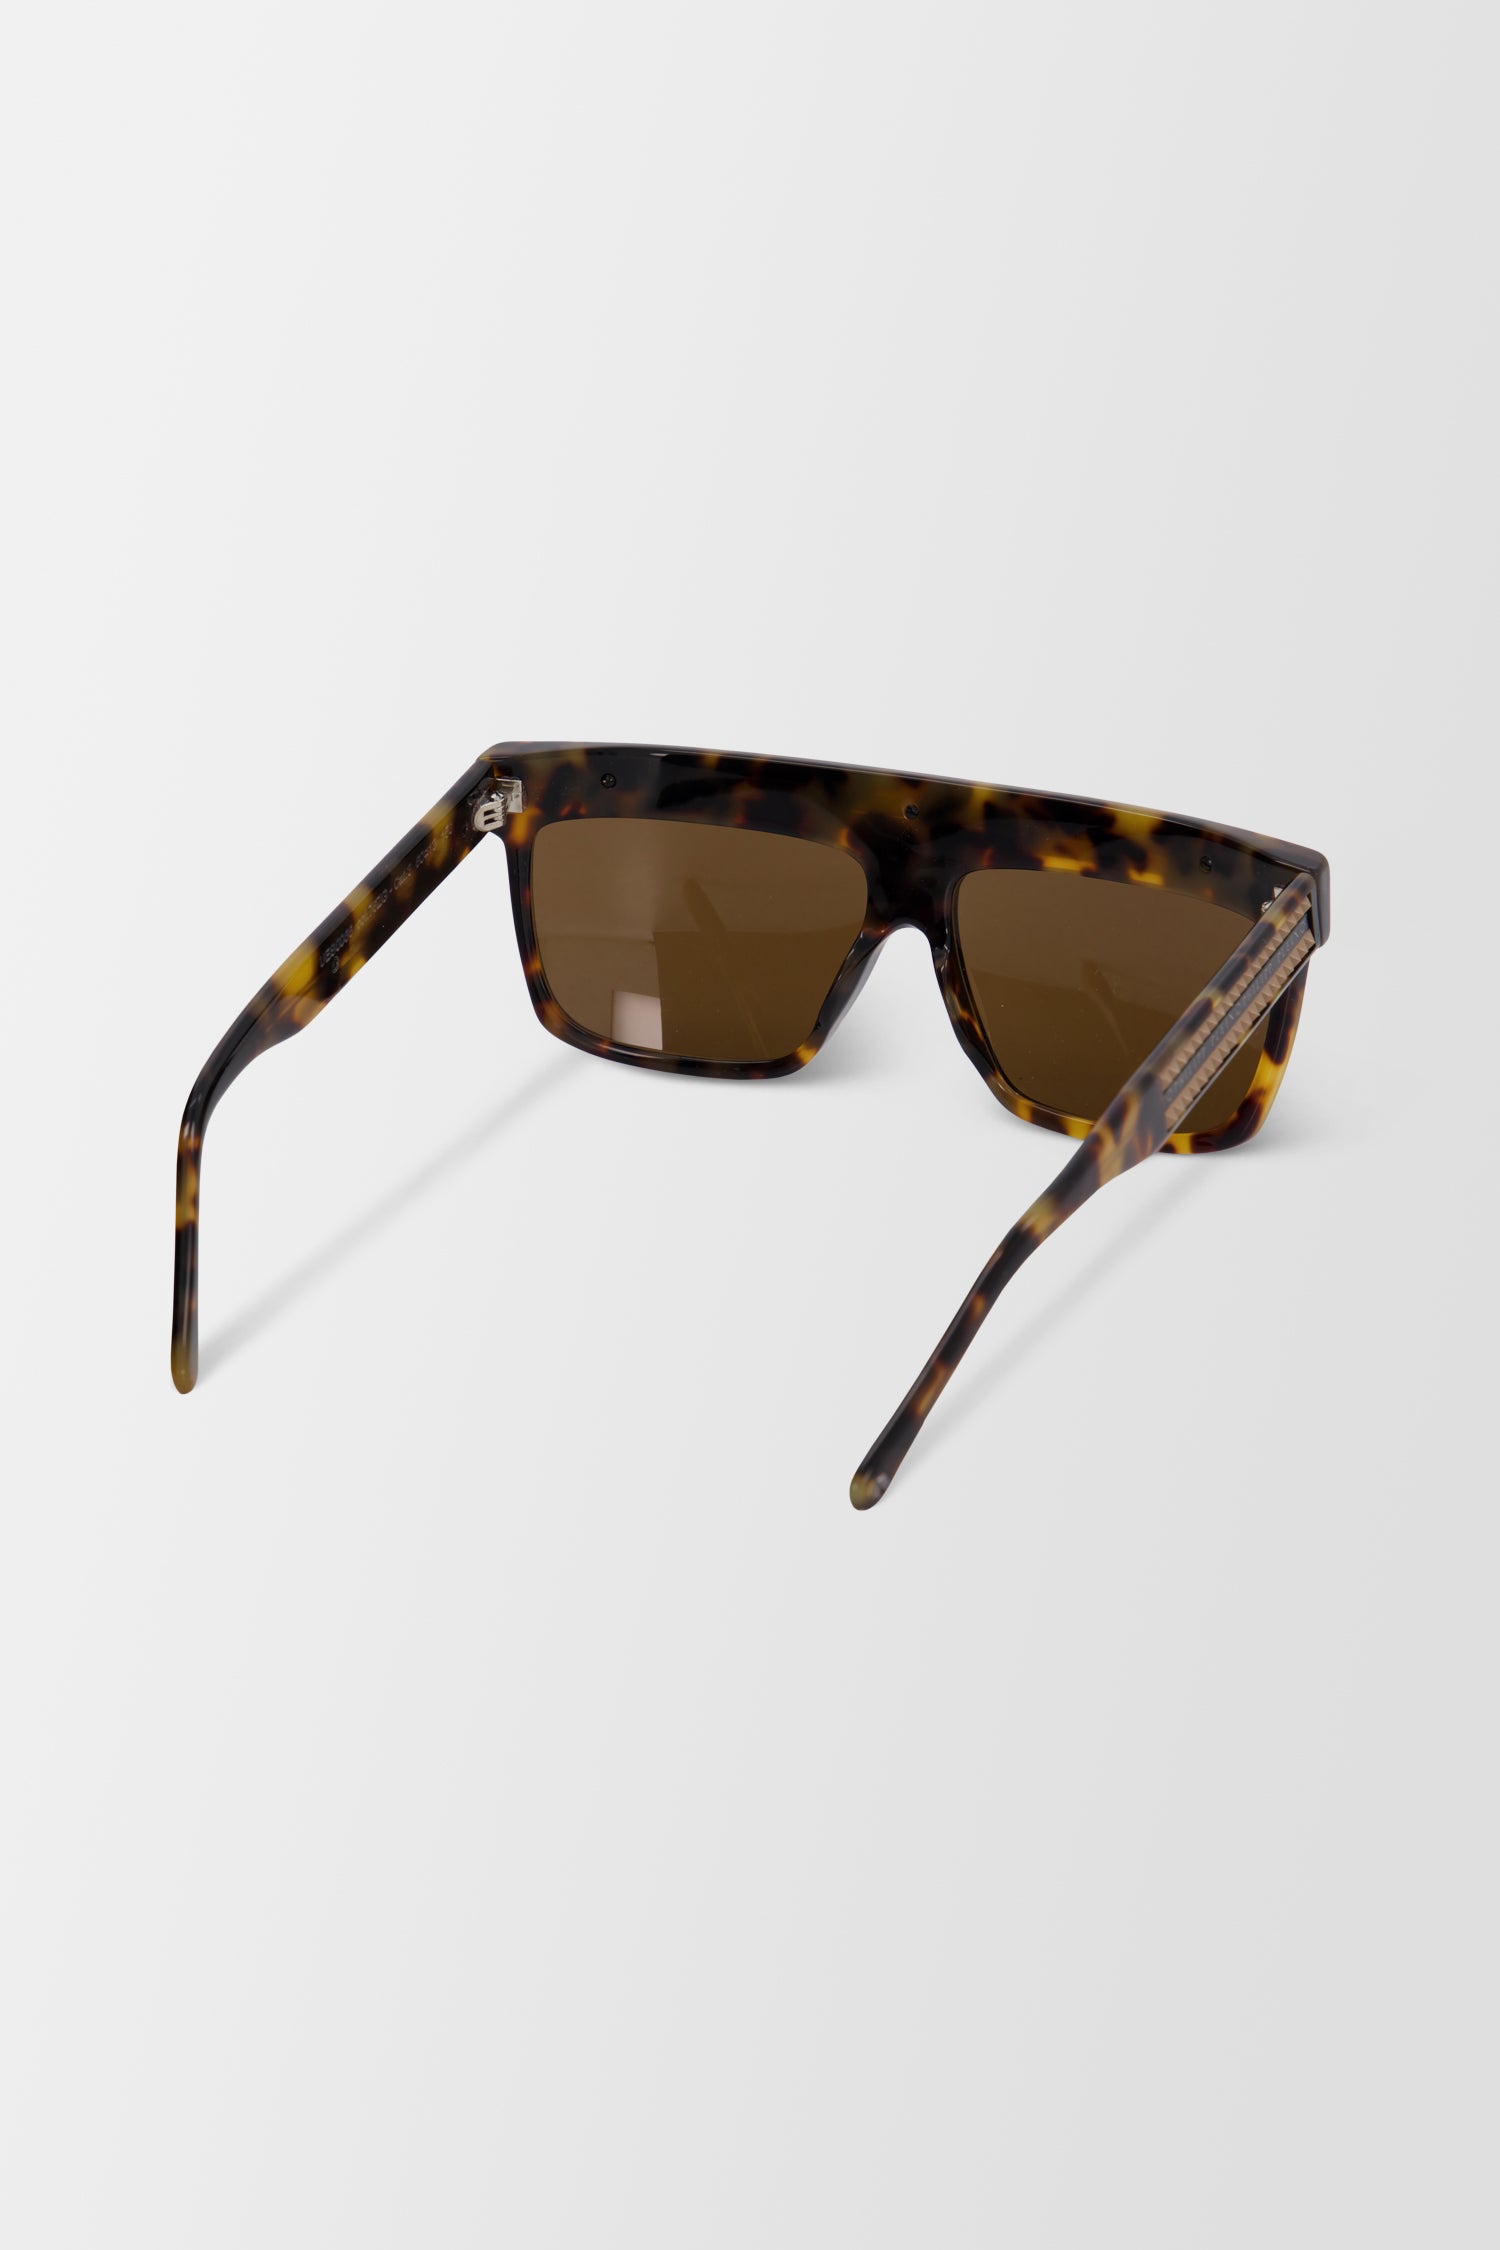 Philipp Plein Beige/Marrone Sunglasses